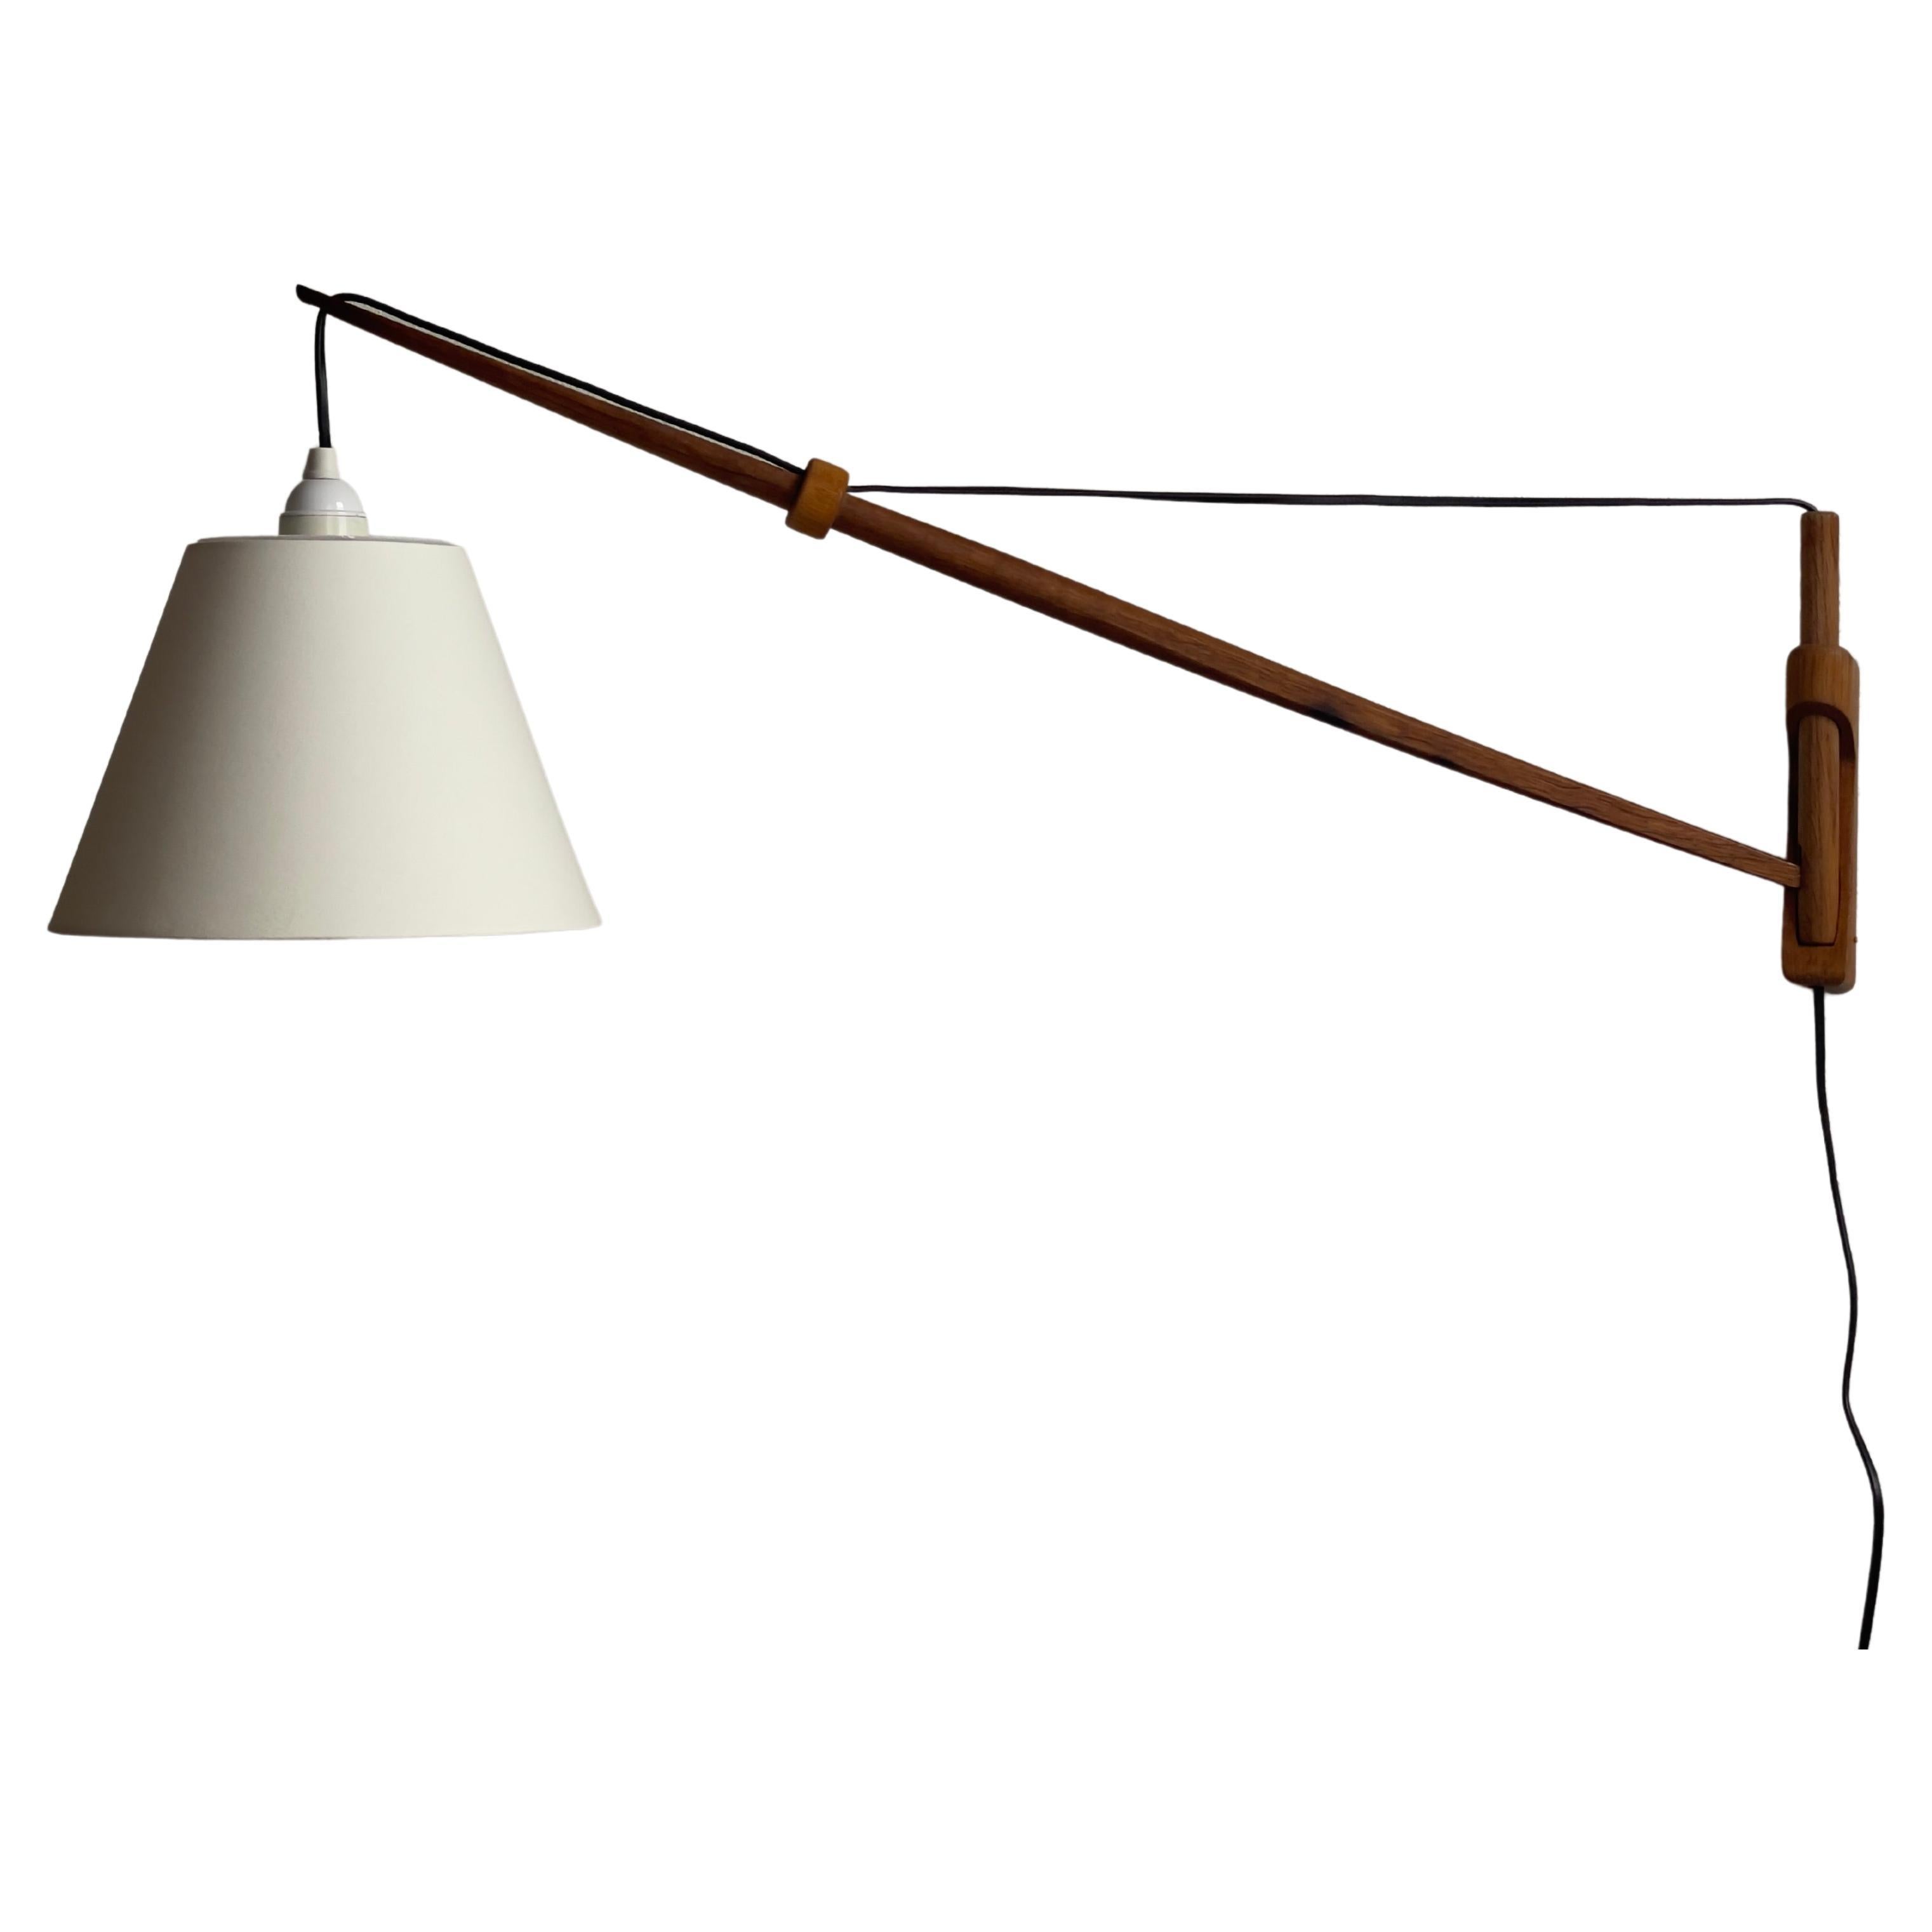 Danemark 1960s danish modern wall lamp/pendant in solid oak with new linen shade.